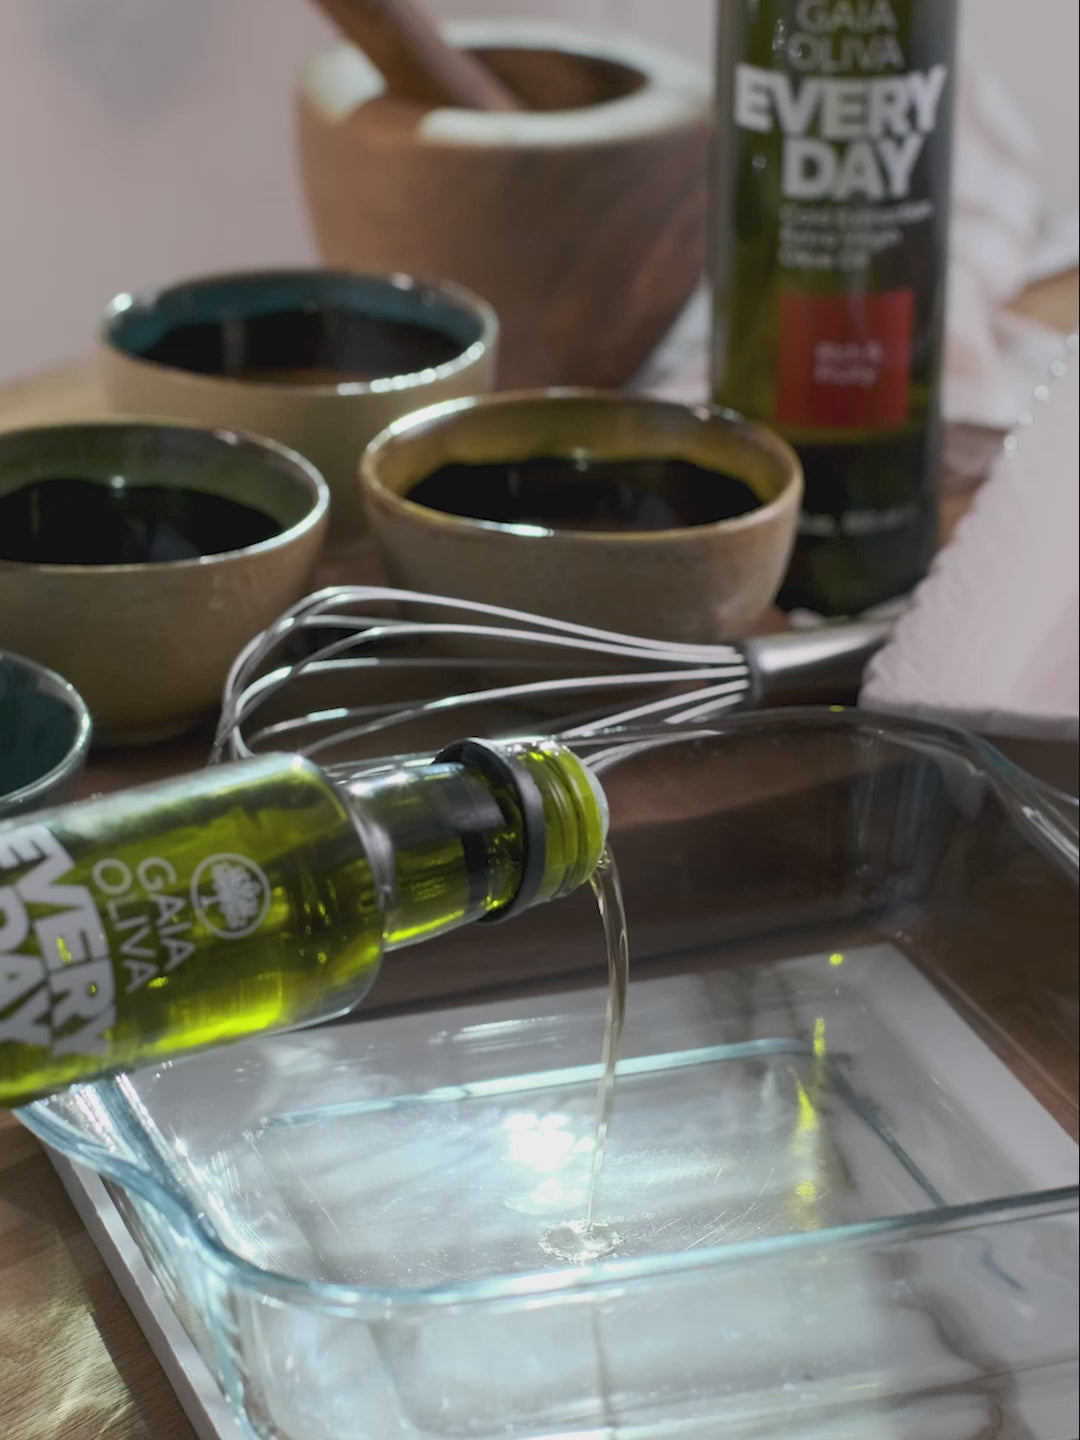 Everyday Extra Virgin Olive Oil 250 ml